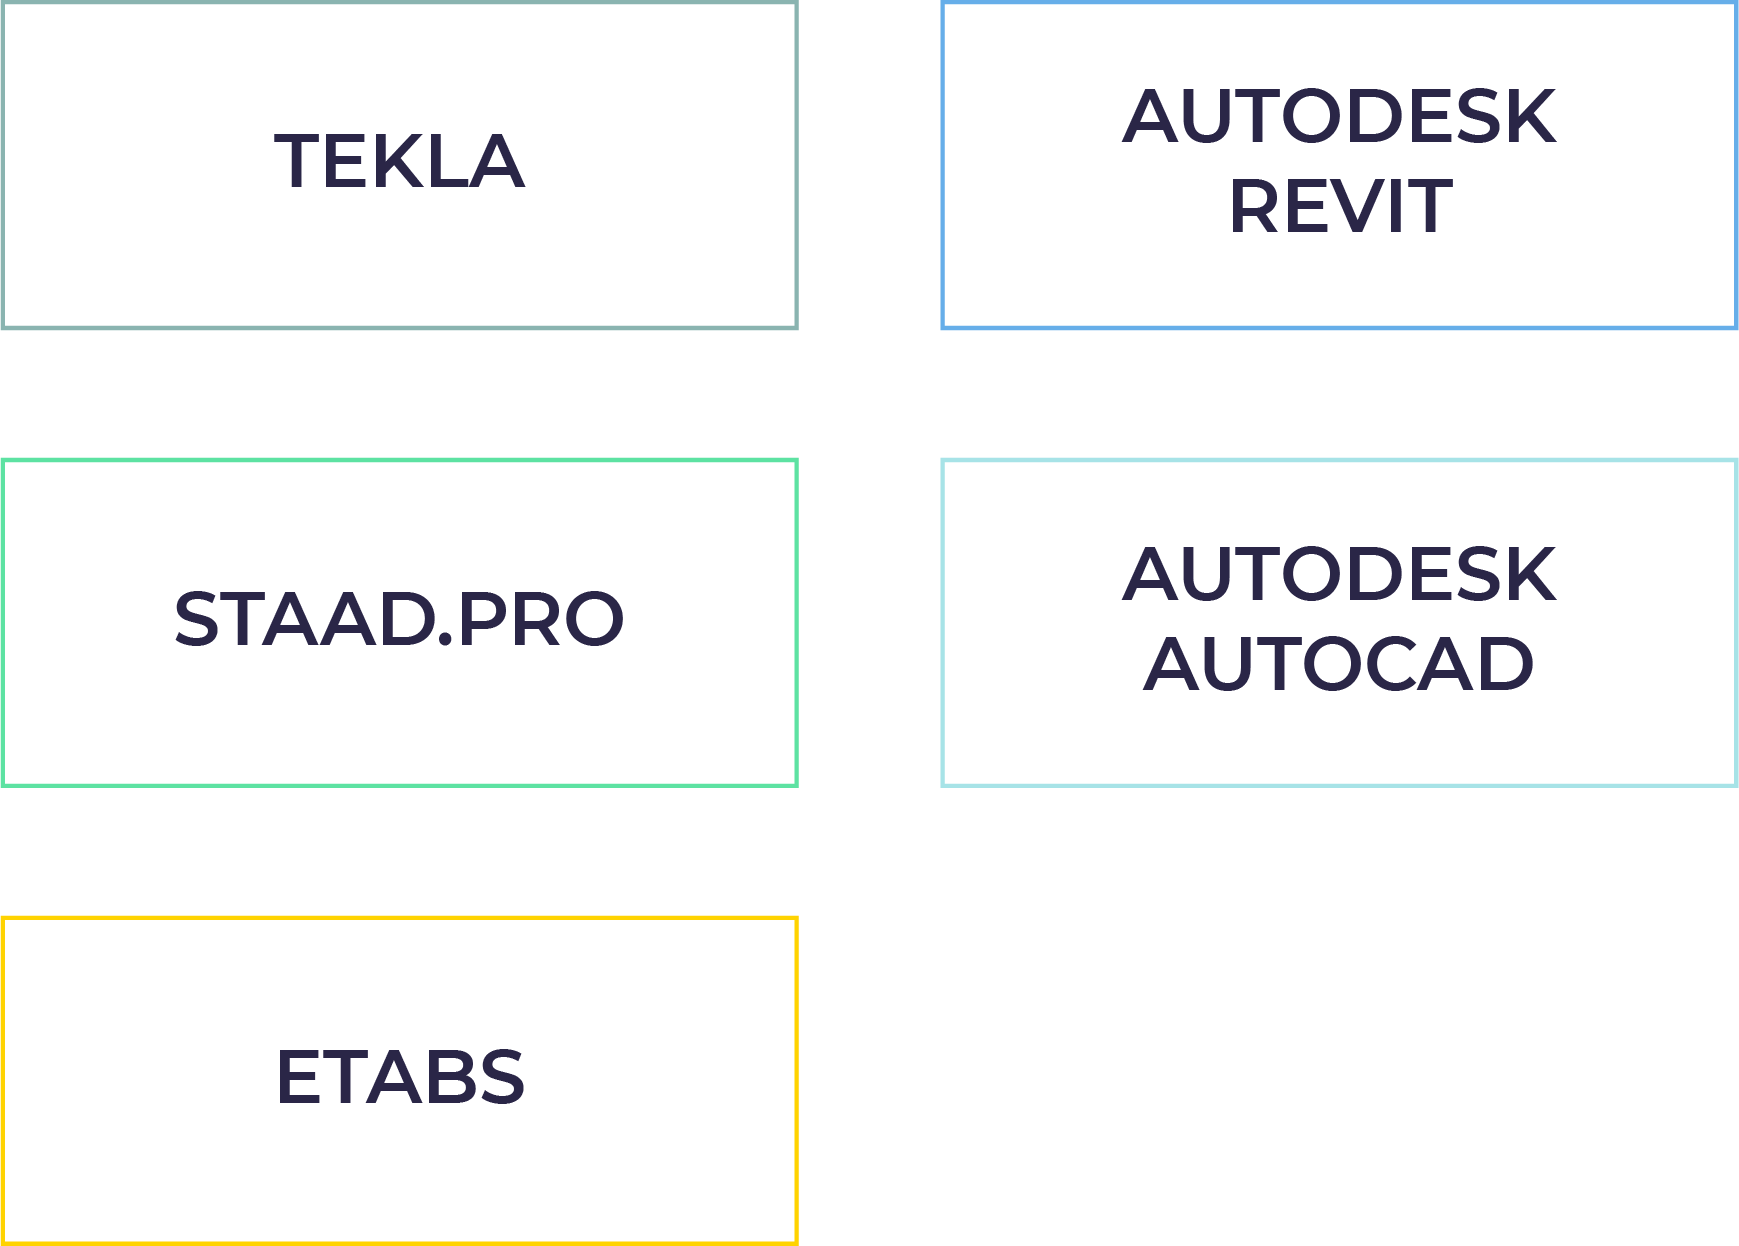 Precast Design and Detailing Services TEKLA AUTODESK REVIT STAADPRO AUTODESK AUTOCAD ETABS